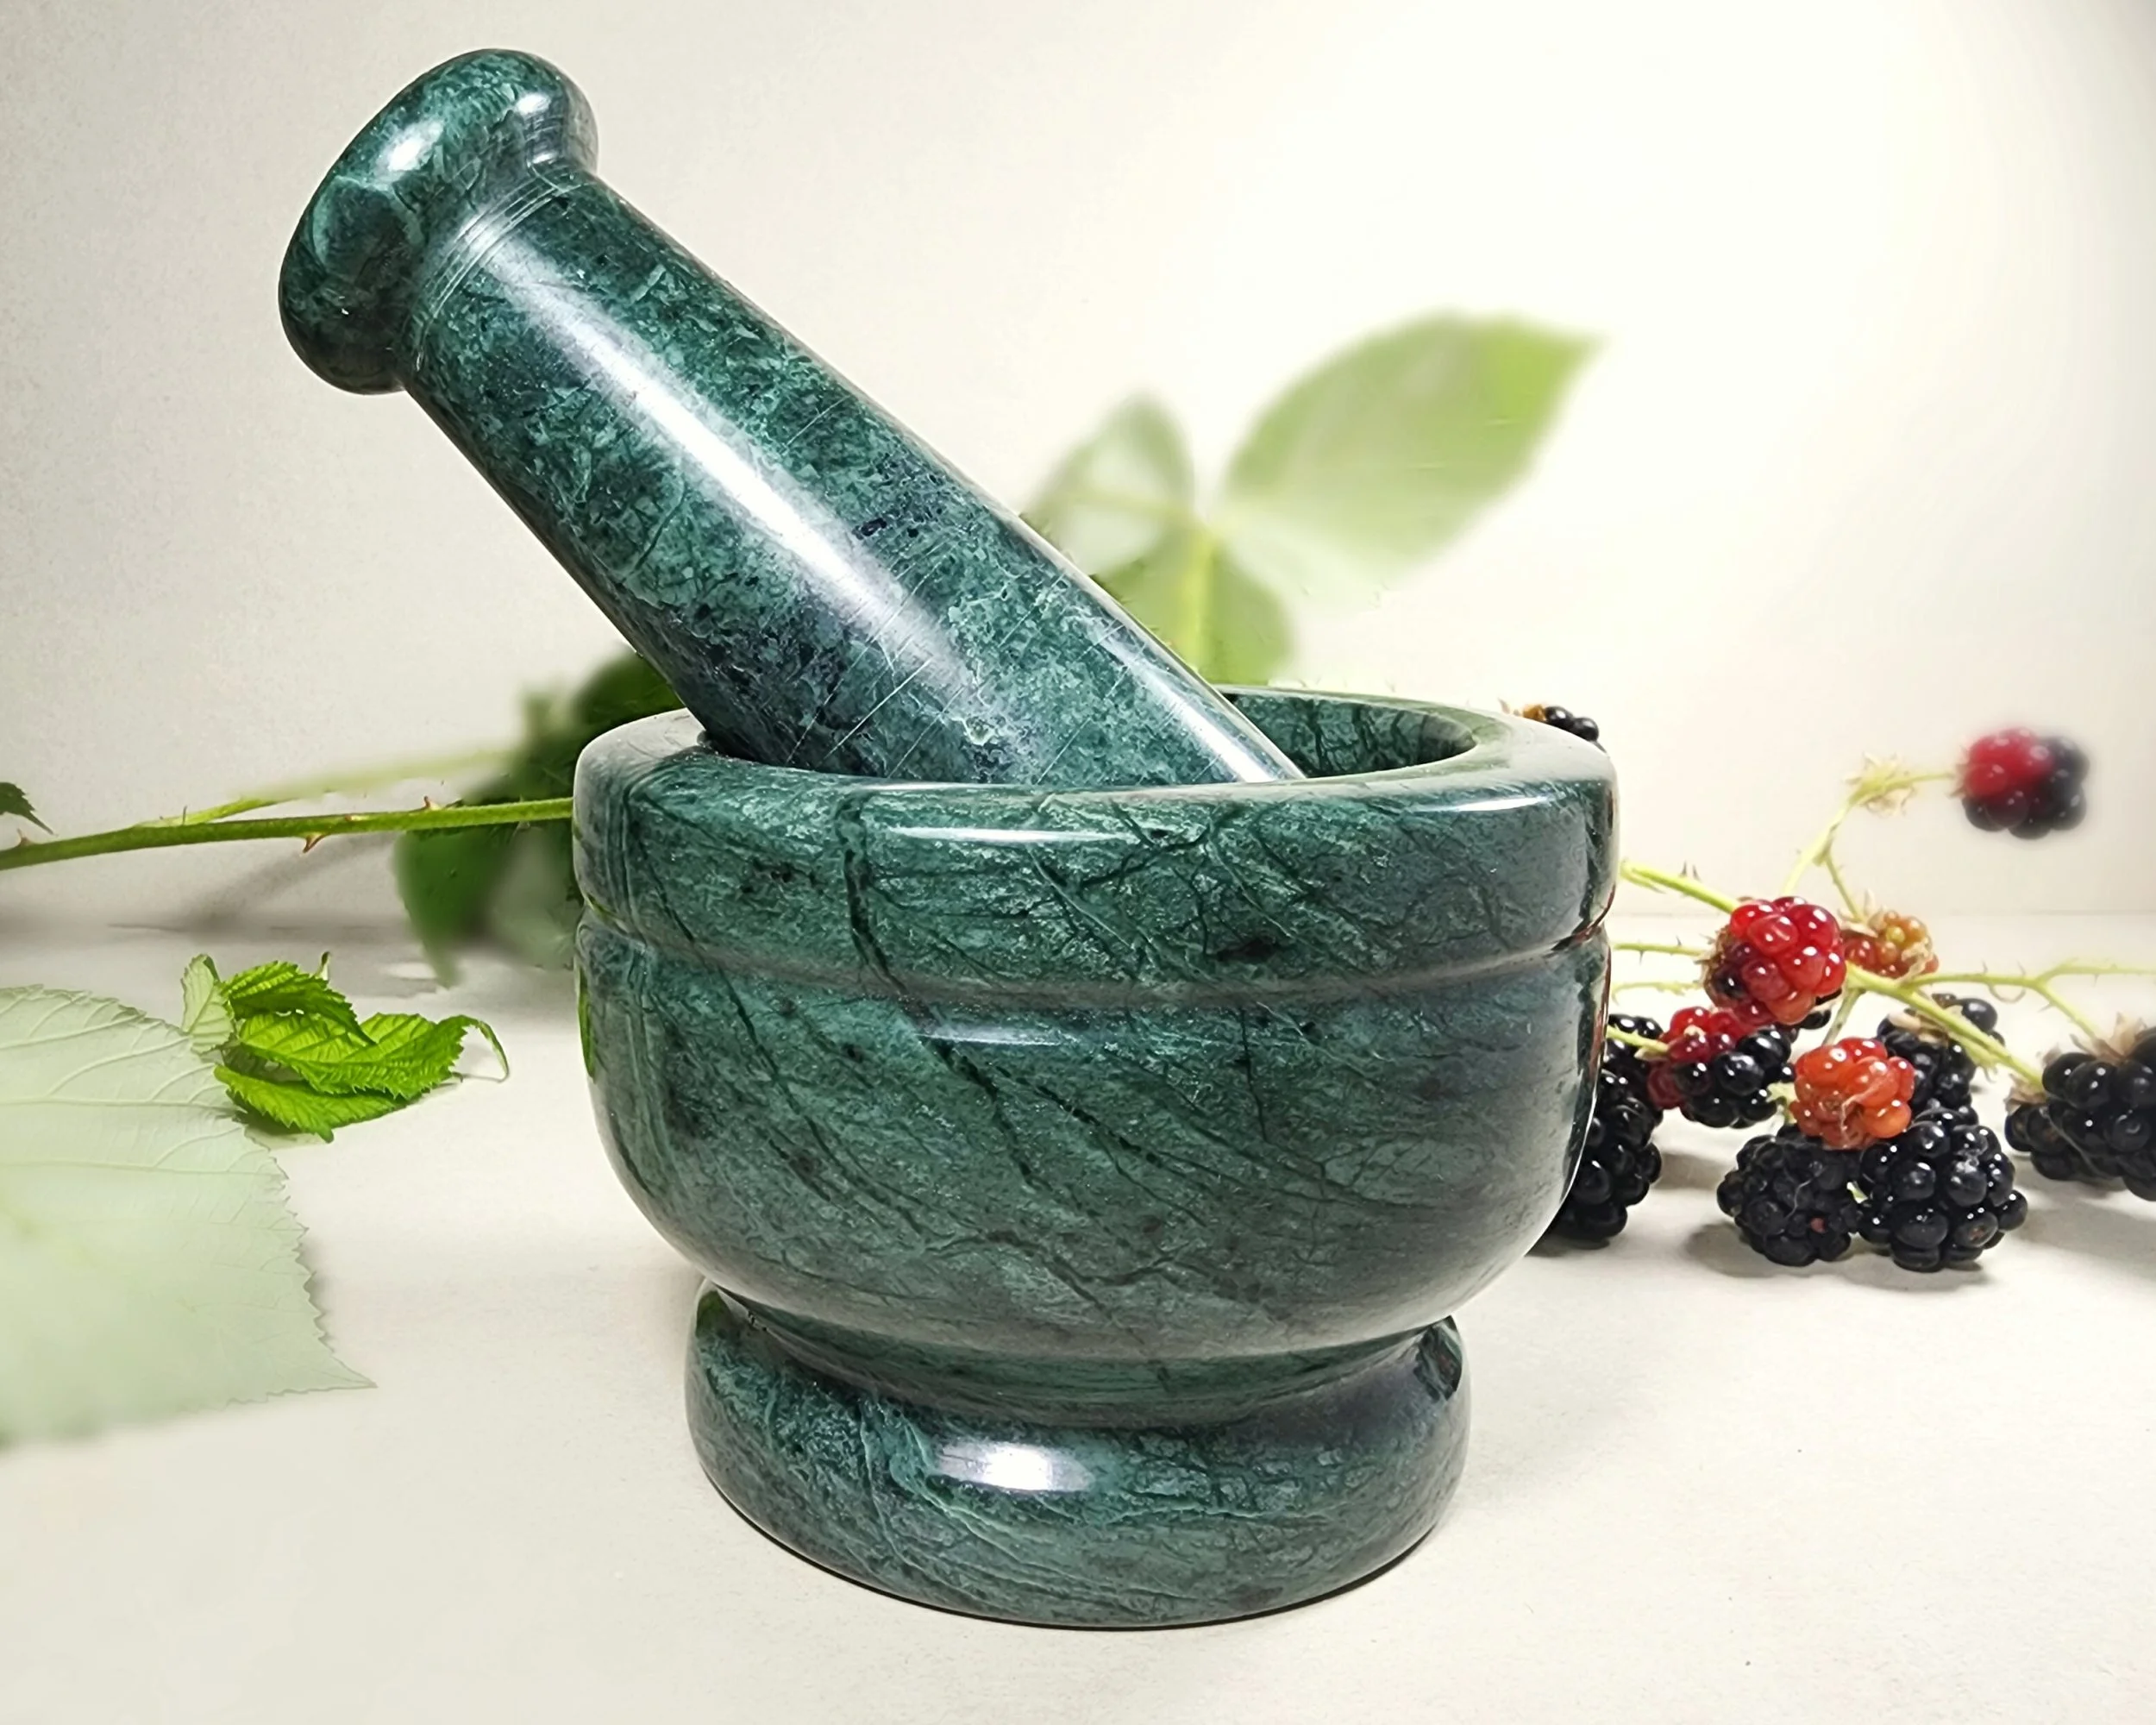 Homiu Pestle and Mortar Premium Natural Marble Spice Herb